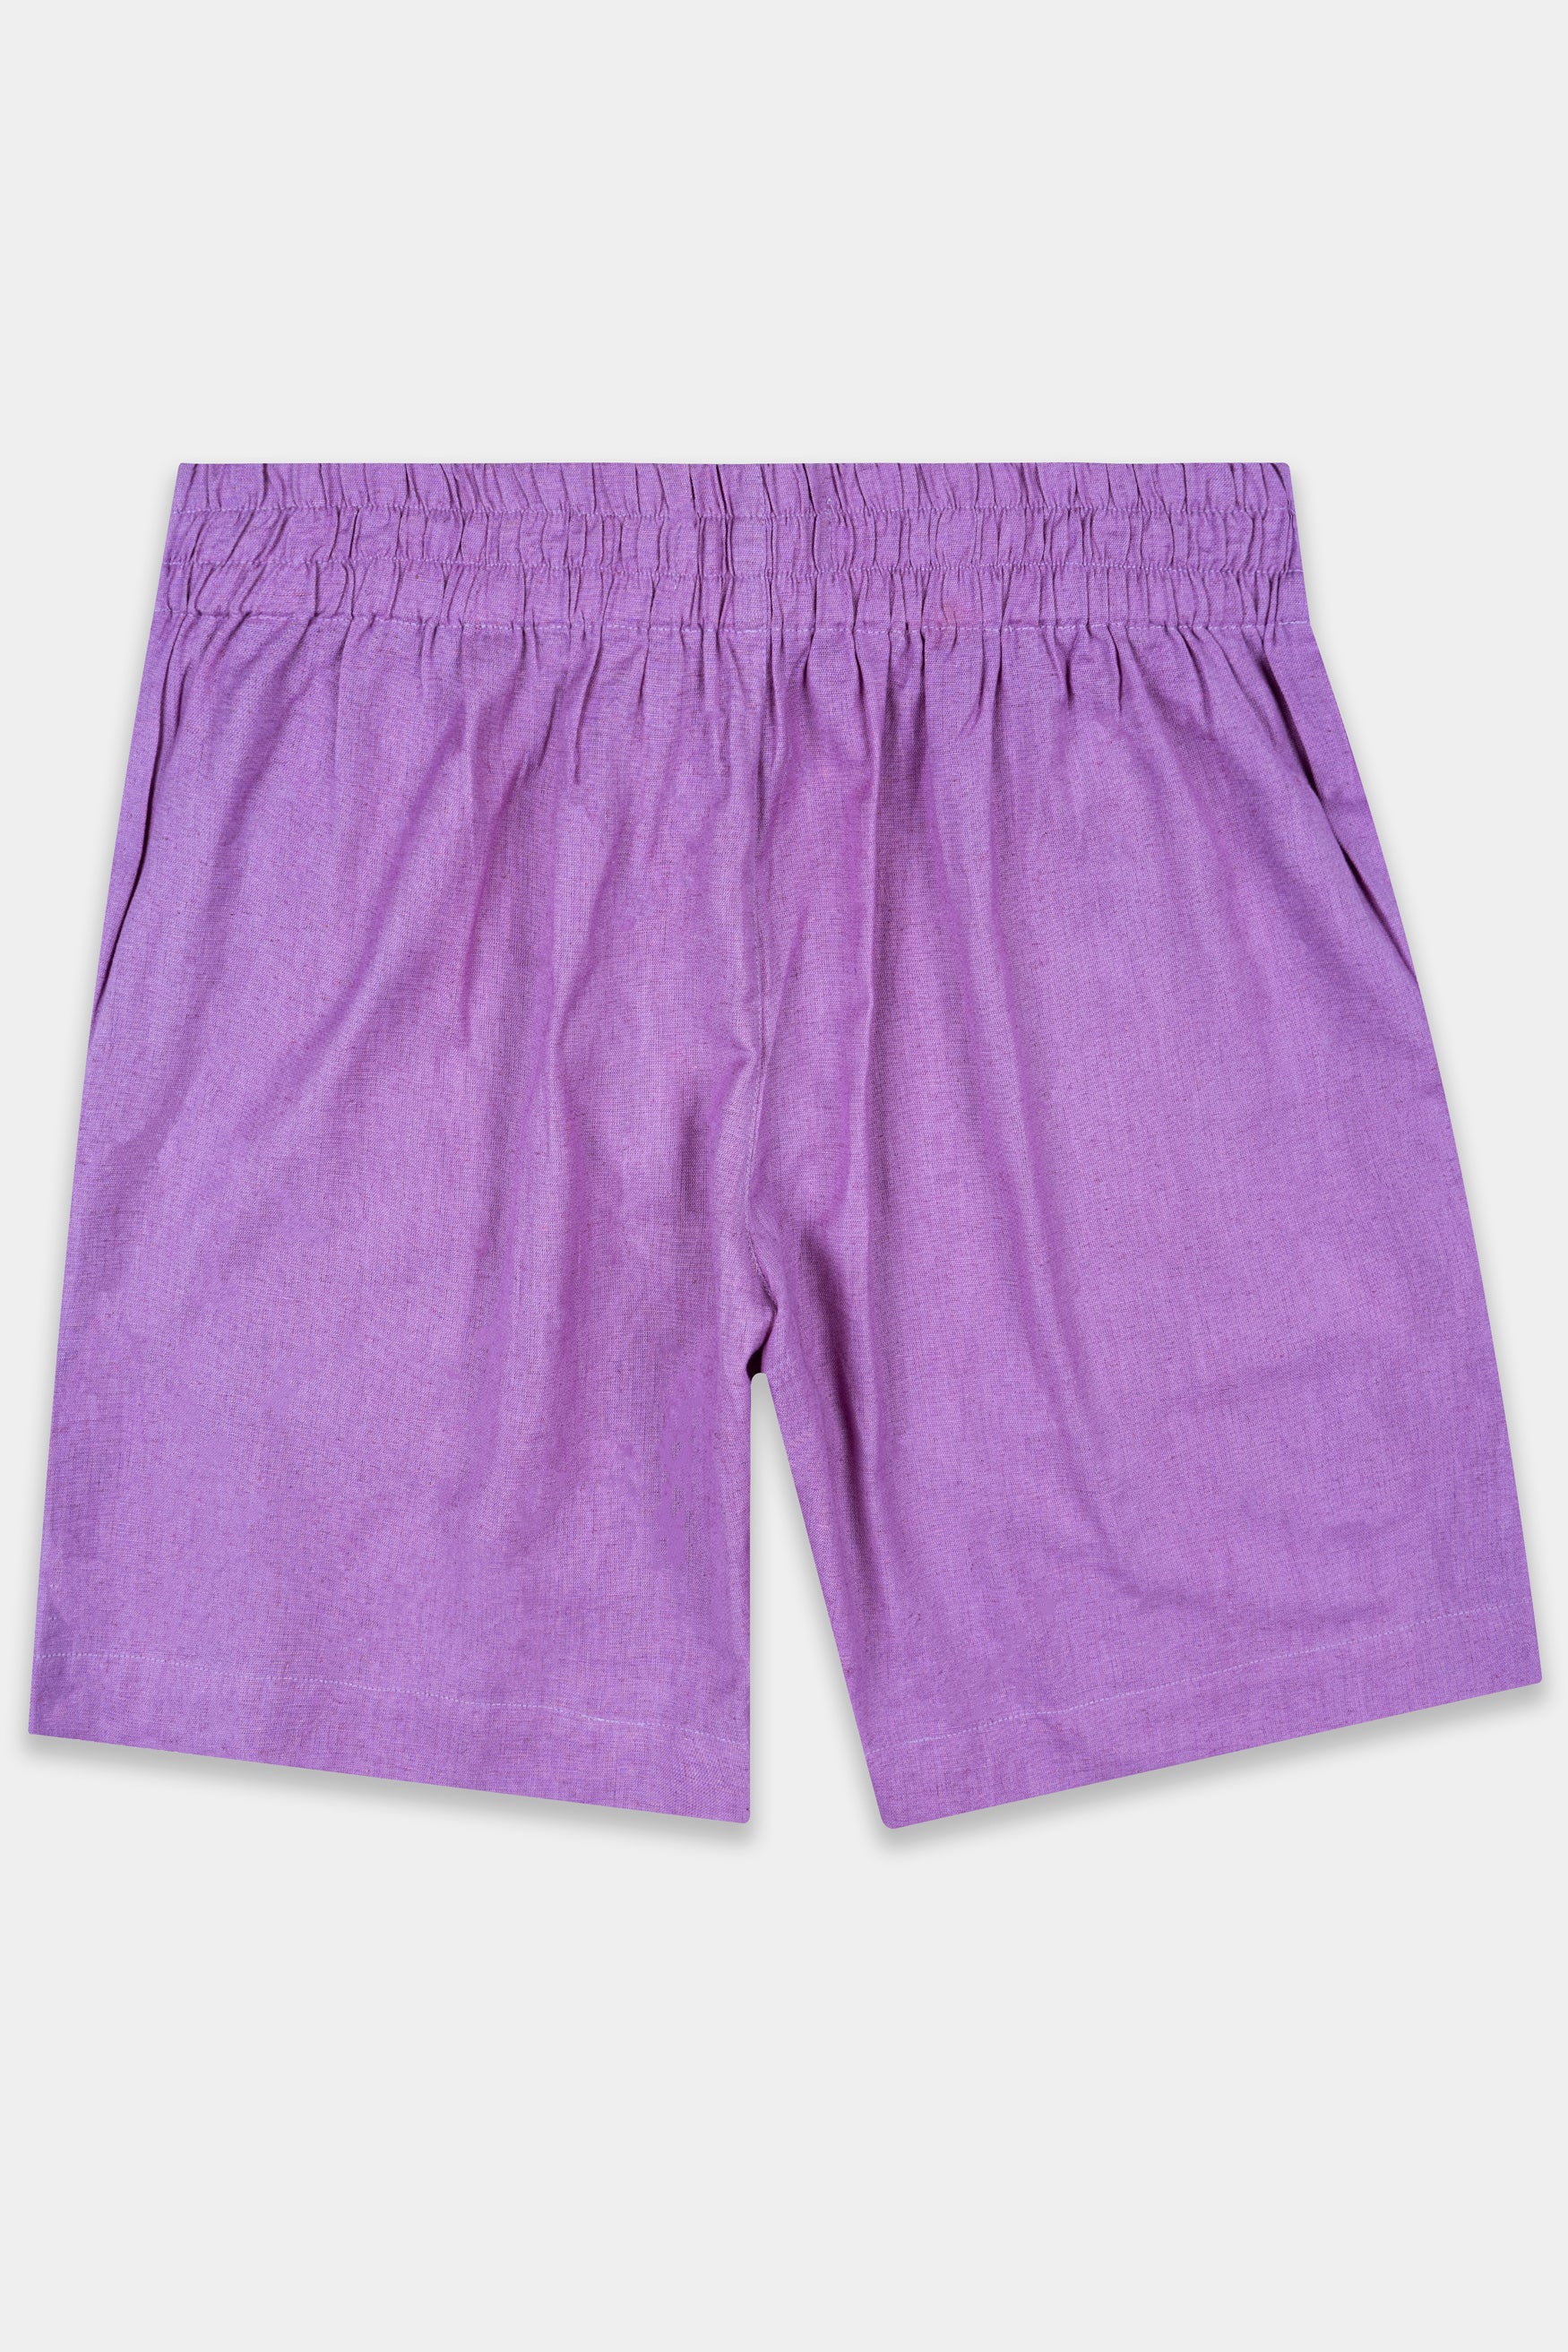 East Side Purple Textured Luxurious Linen Shorts